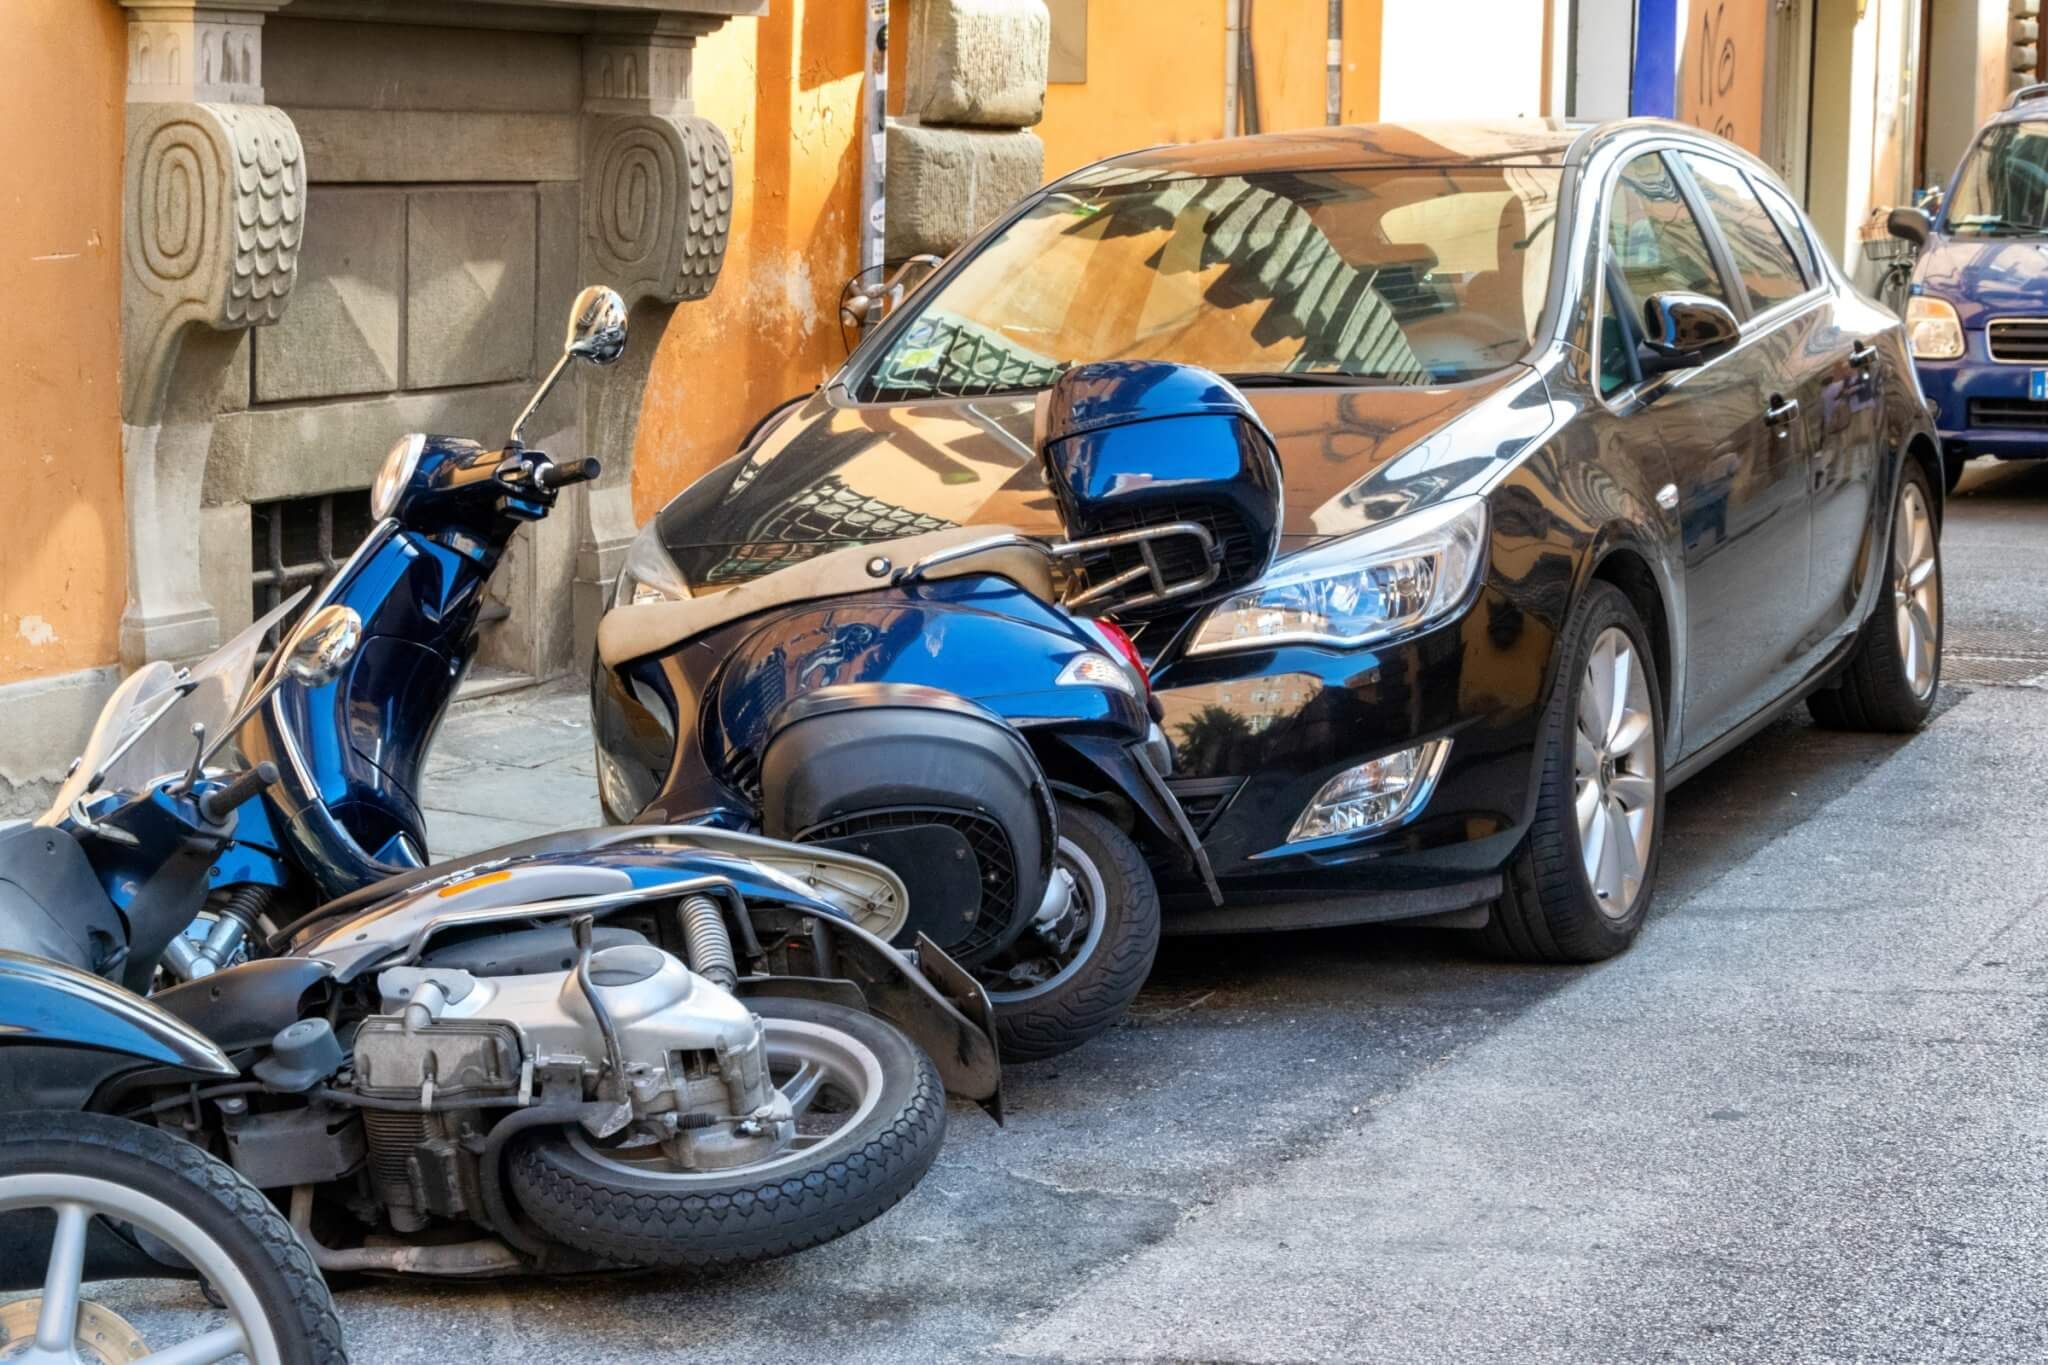 Autounfall im EU-Ausland